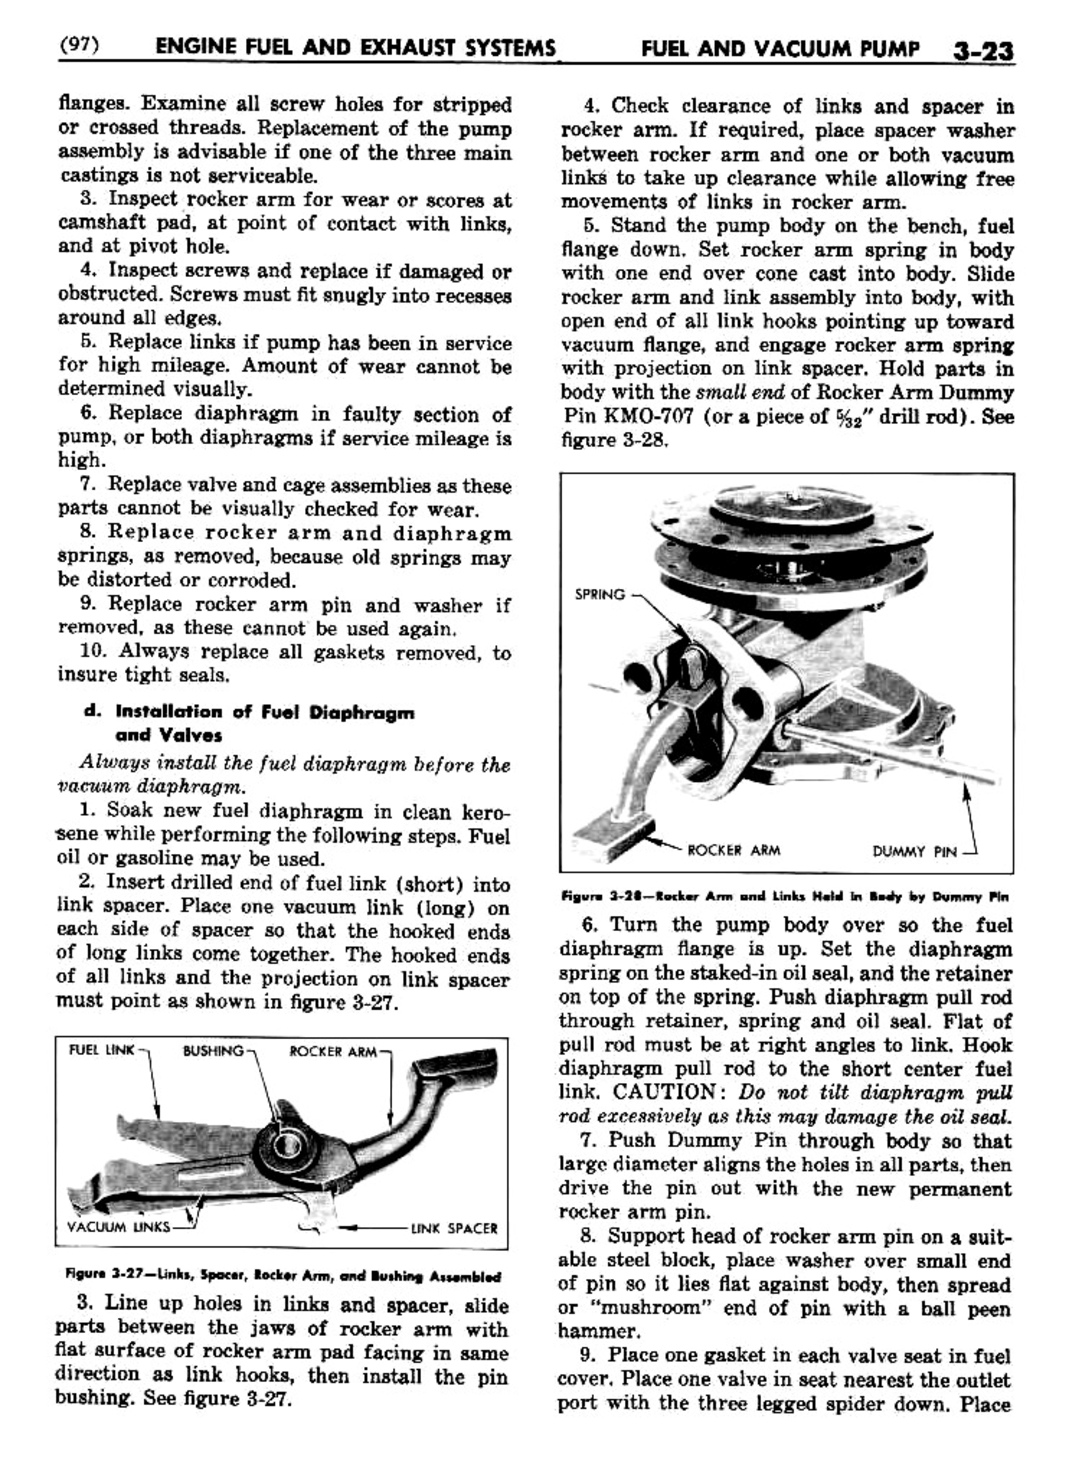 n_04 1948 Buick Shop Manual - Engine Fuel & Exhaust-023-023.jpg